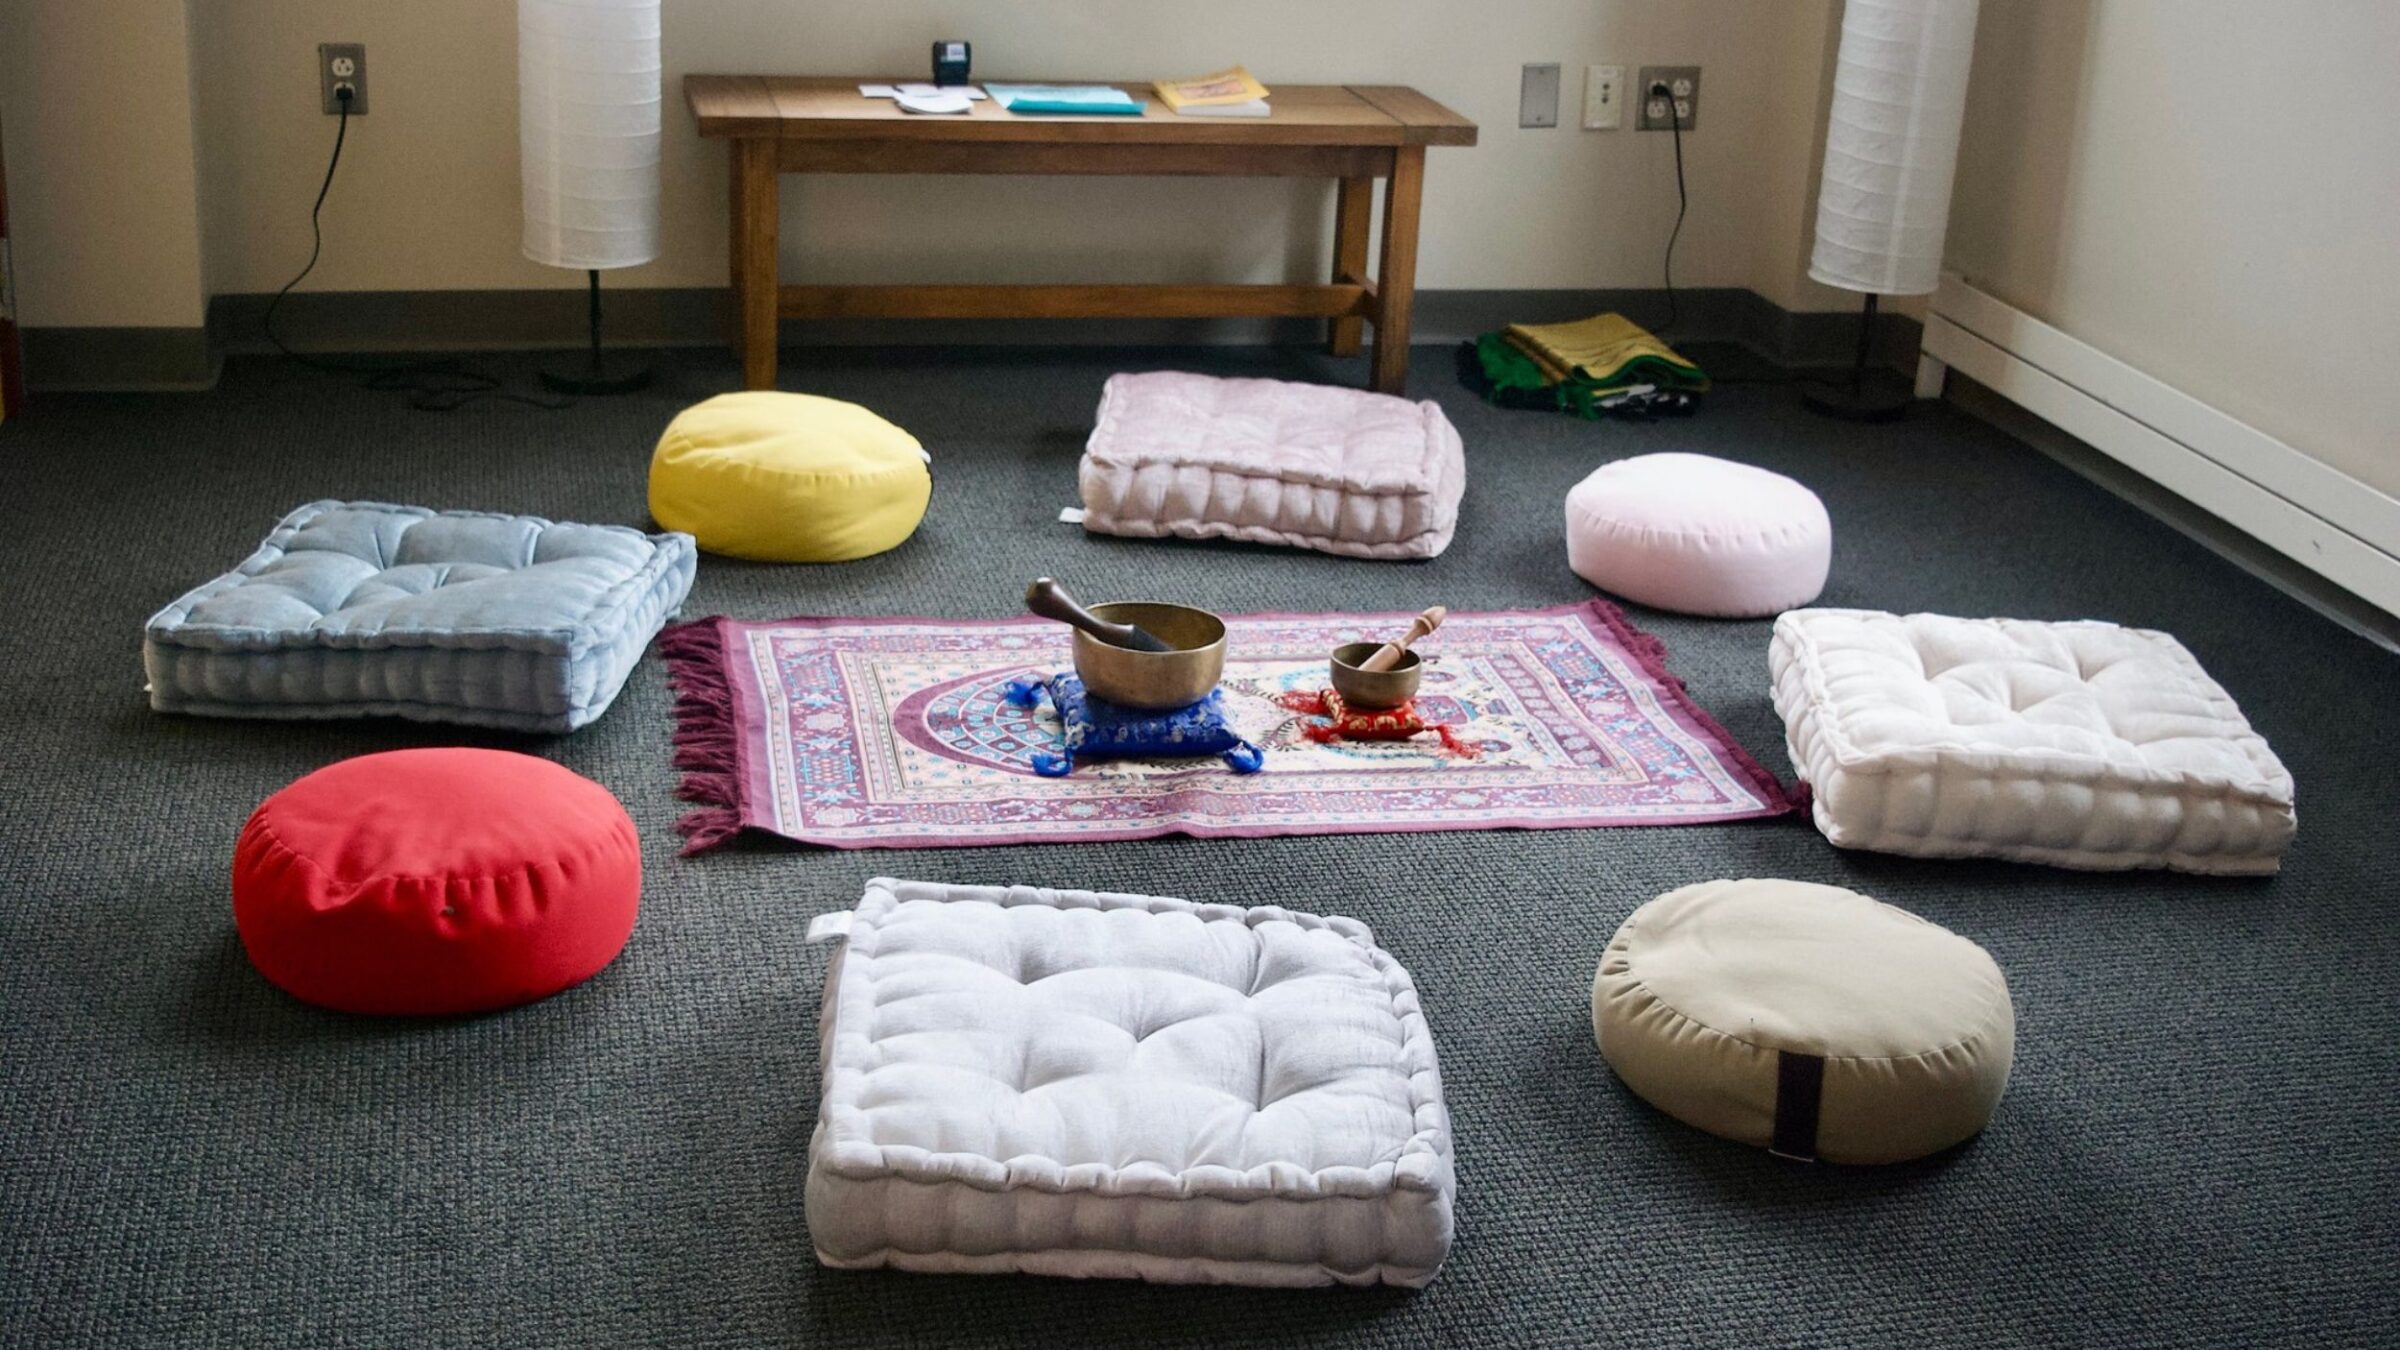 interfaith room with religious items